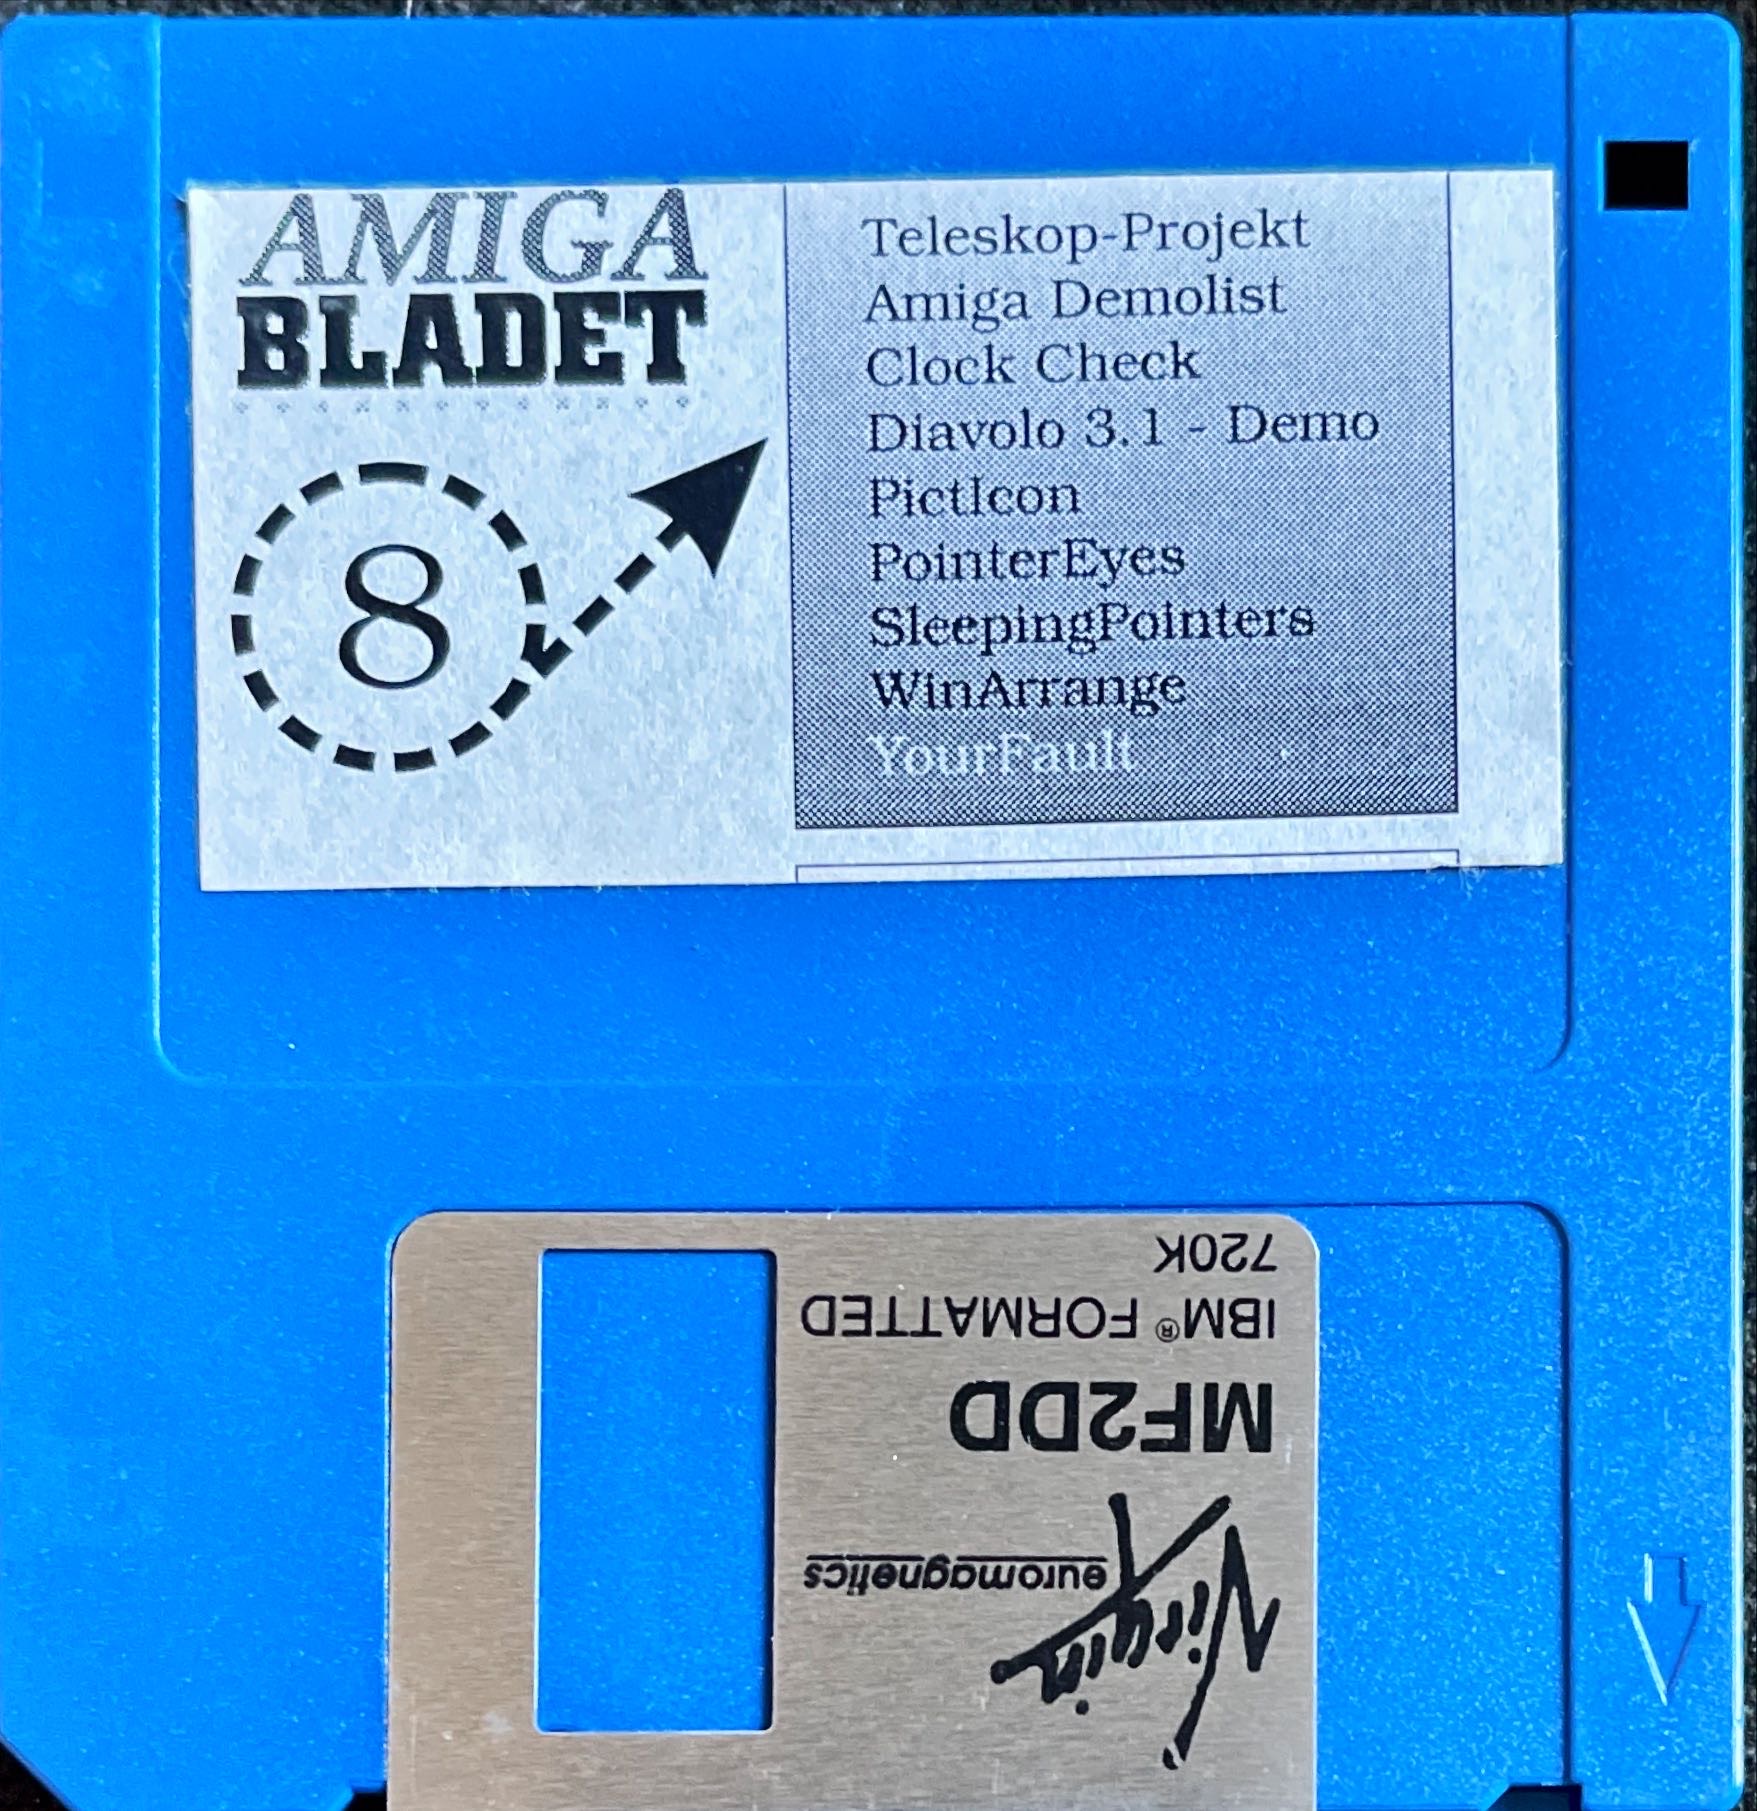 Amiga Bladet 8